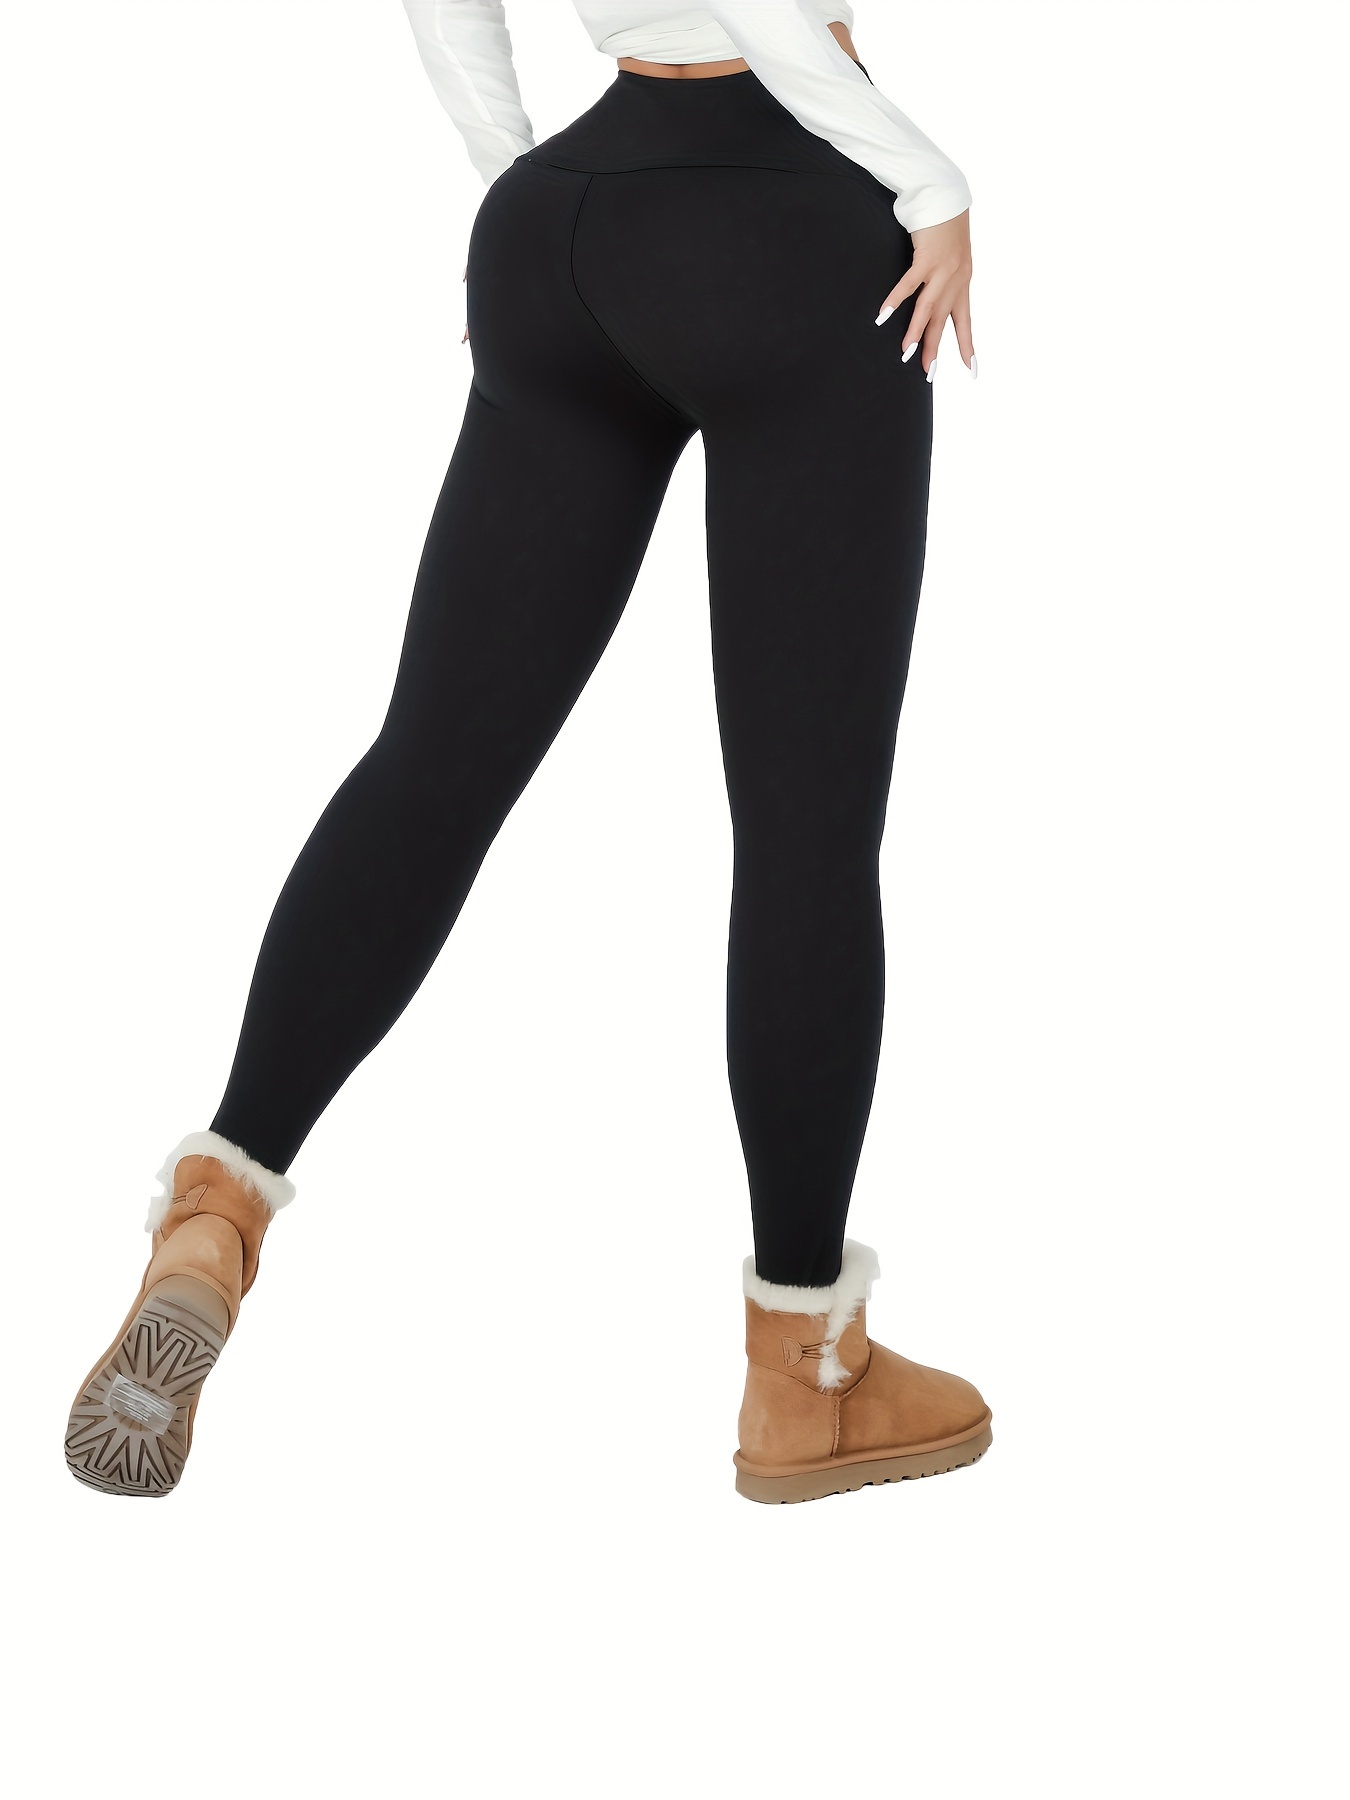 JOYSPELS Women's Fleece Lined Thermal Leggings with Pockets, High